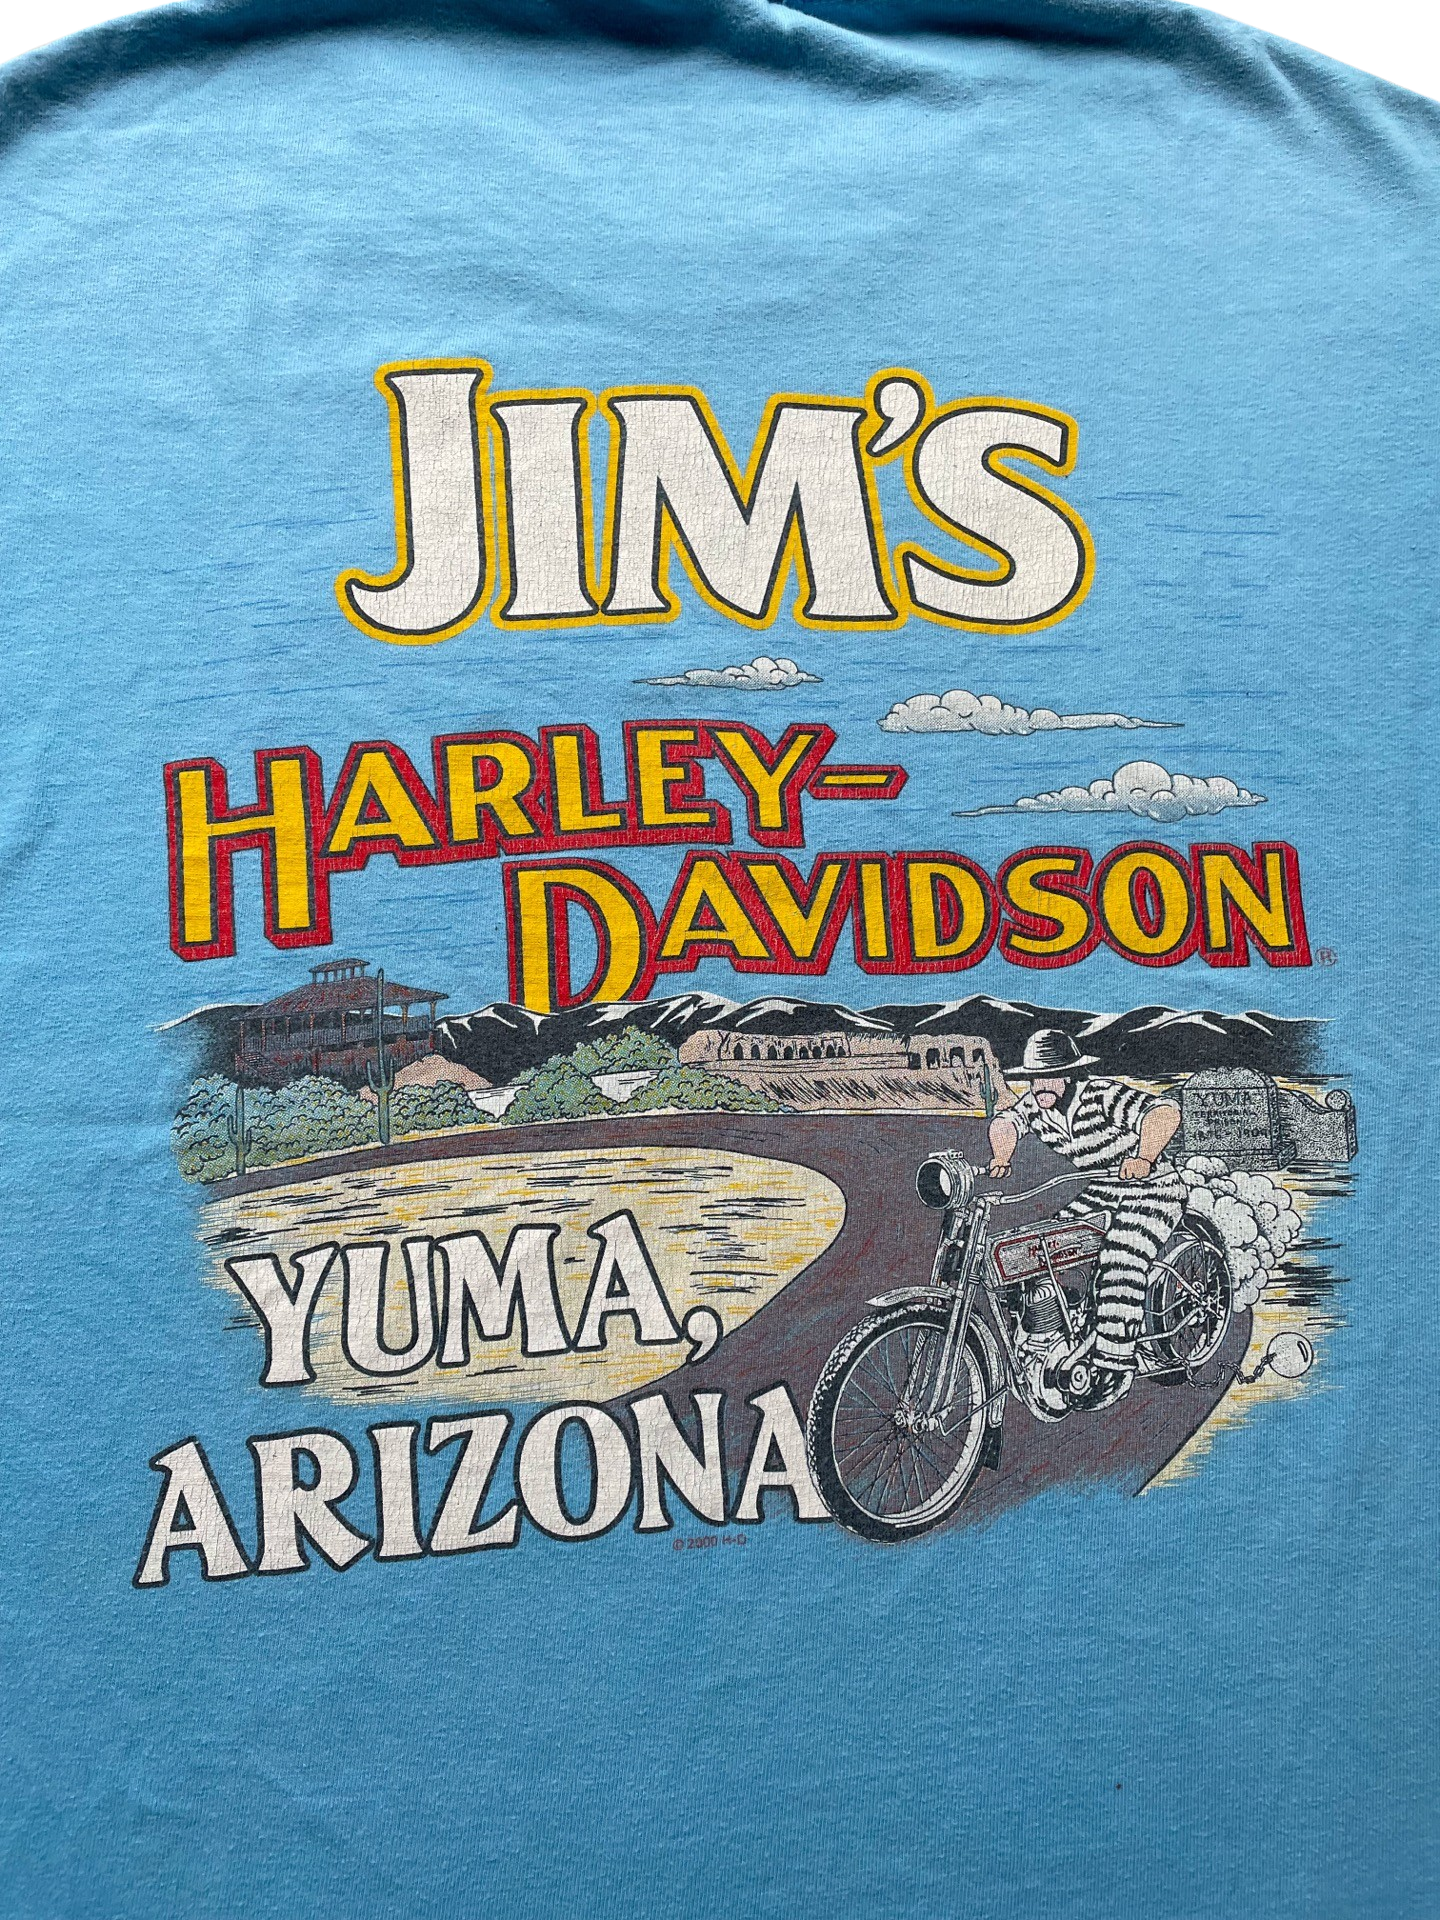 Vintage Harley Davidson t-shirt